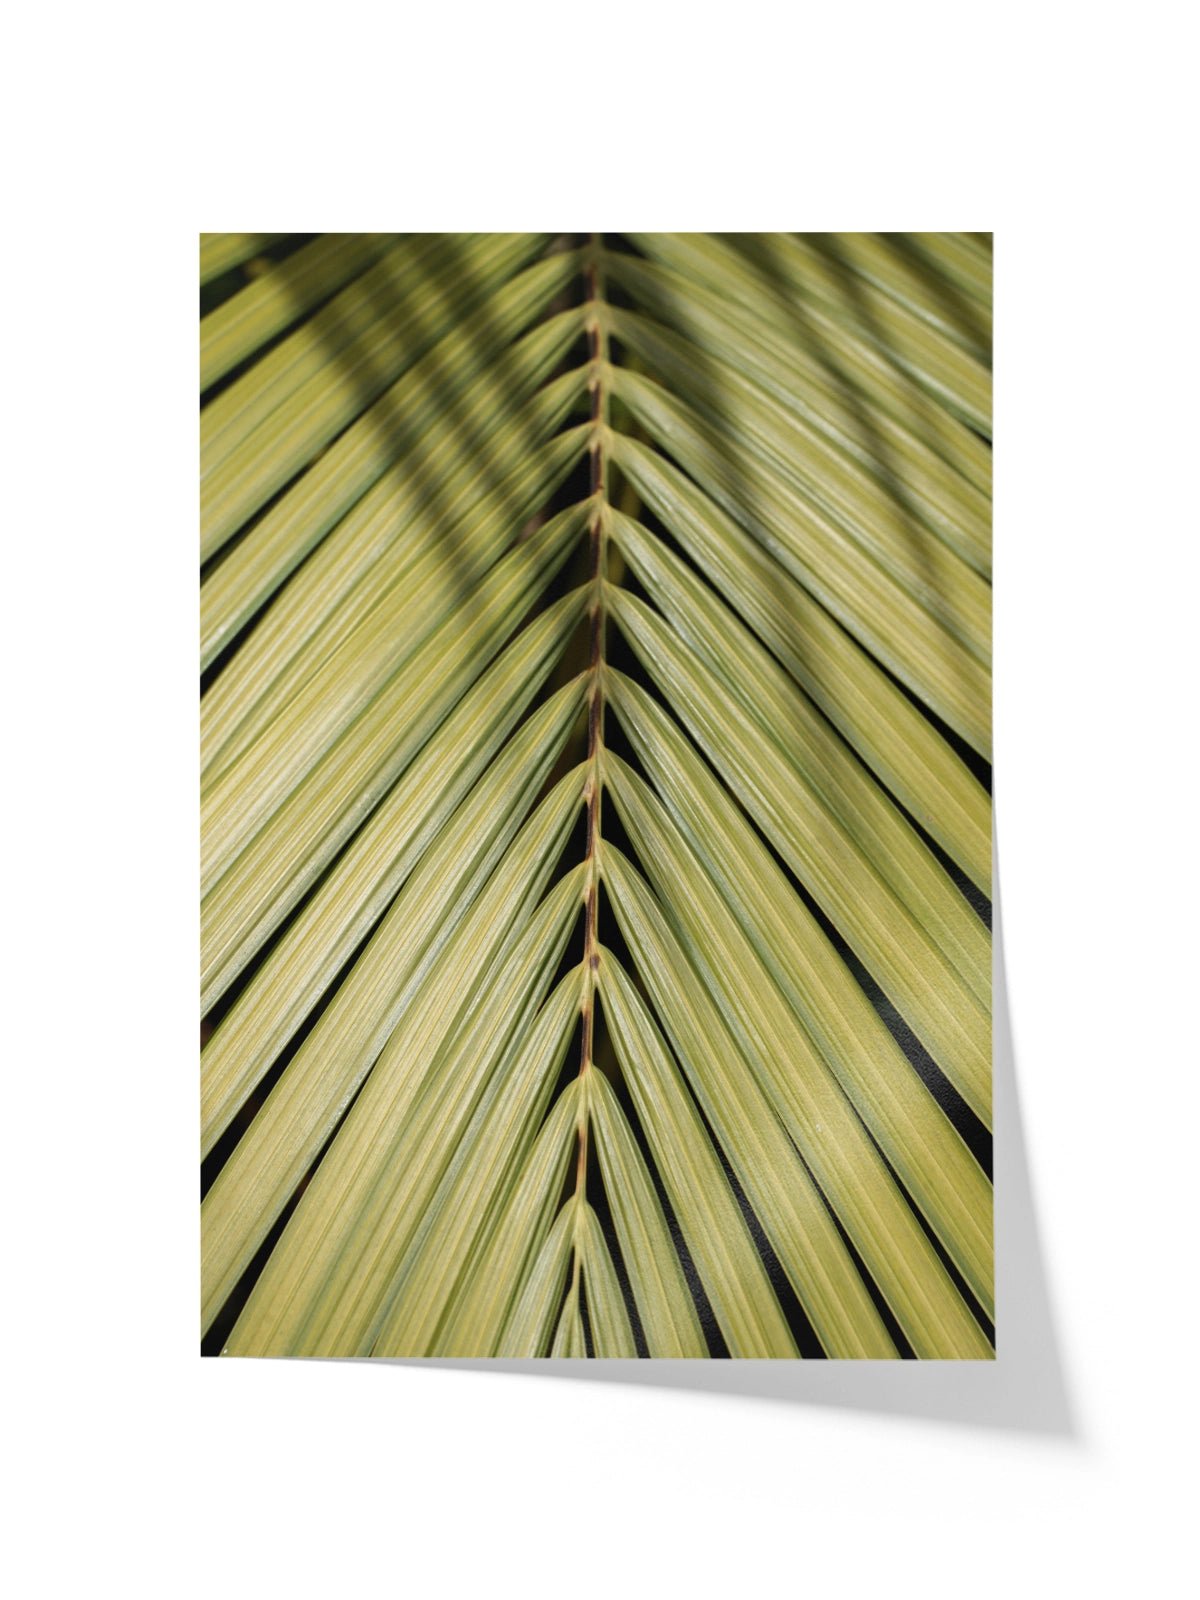 Tropical Green - Lámina de Henrike Schenk - Decora tu casa en Nomadart